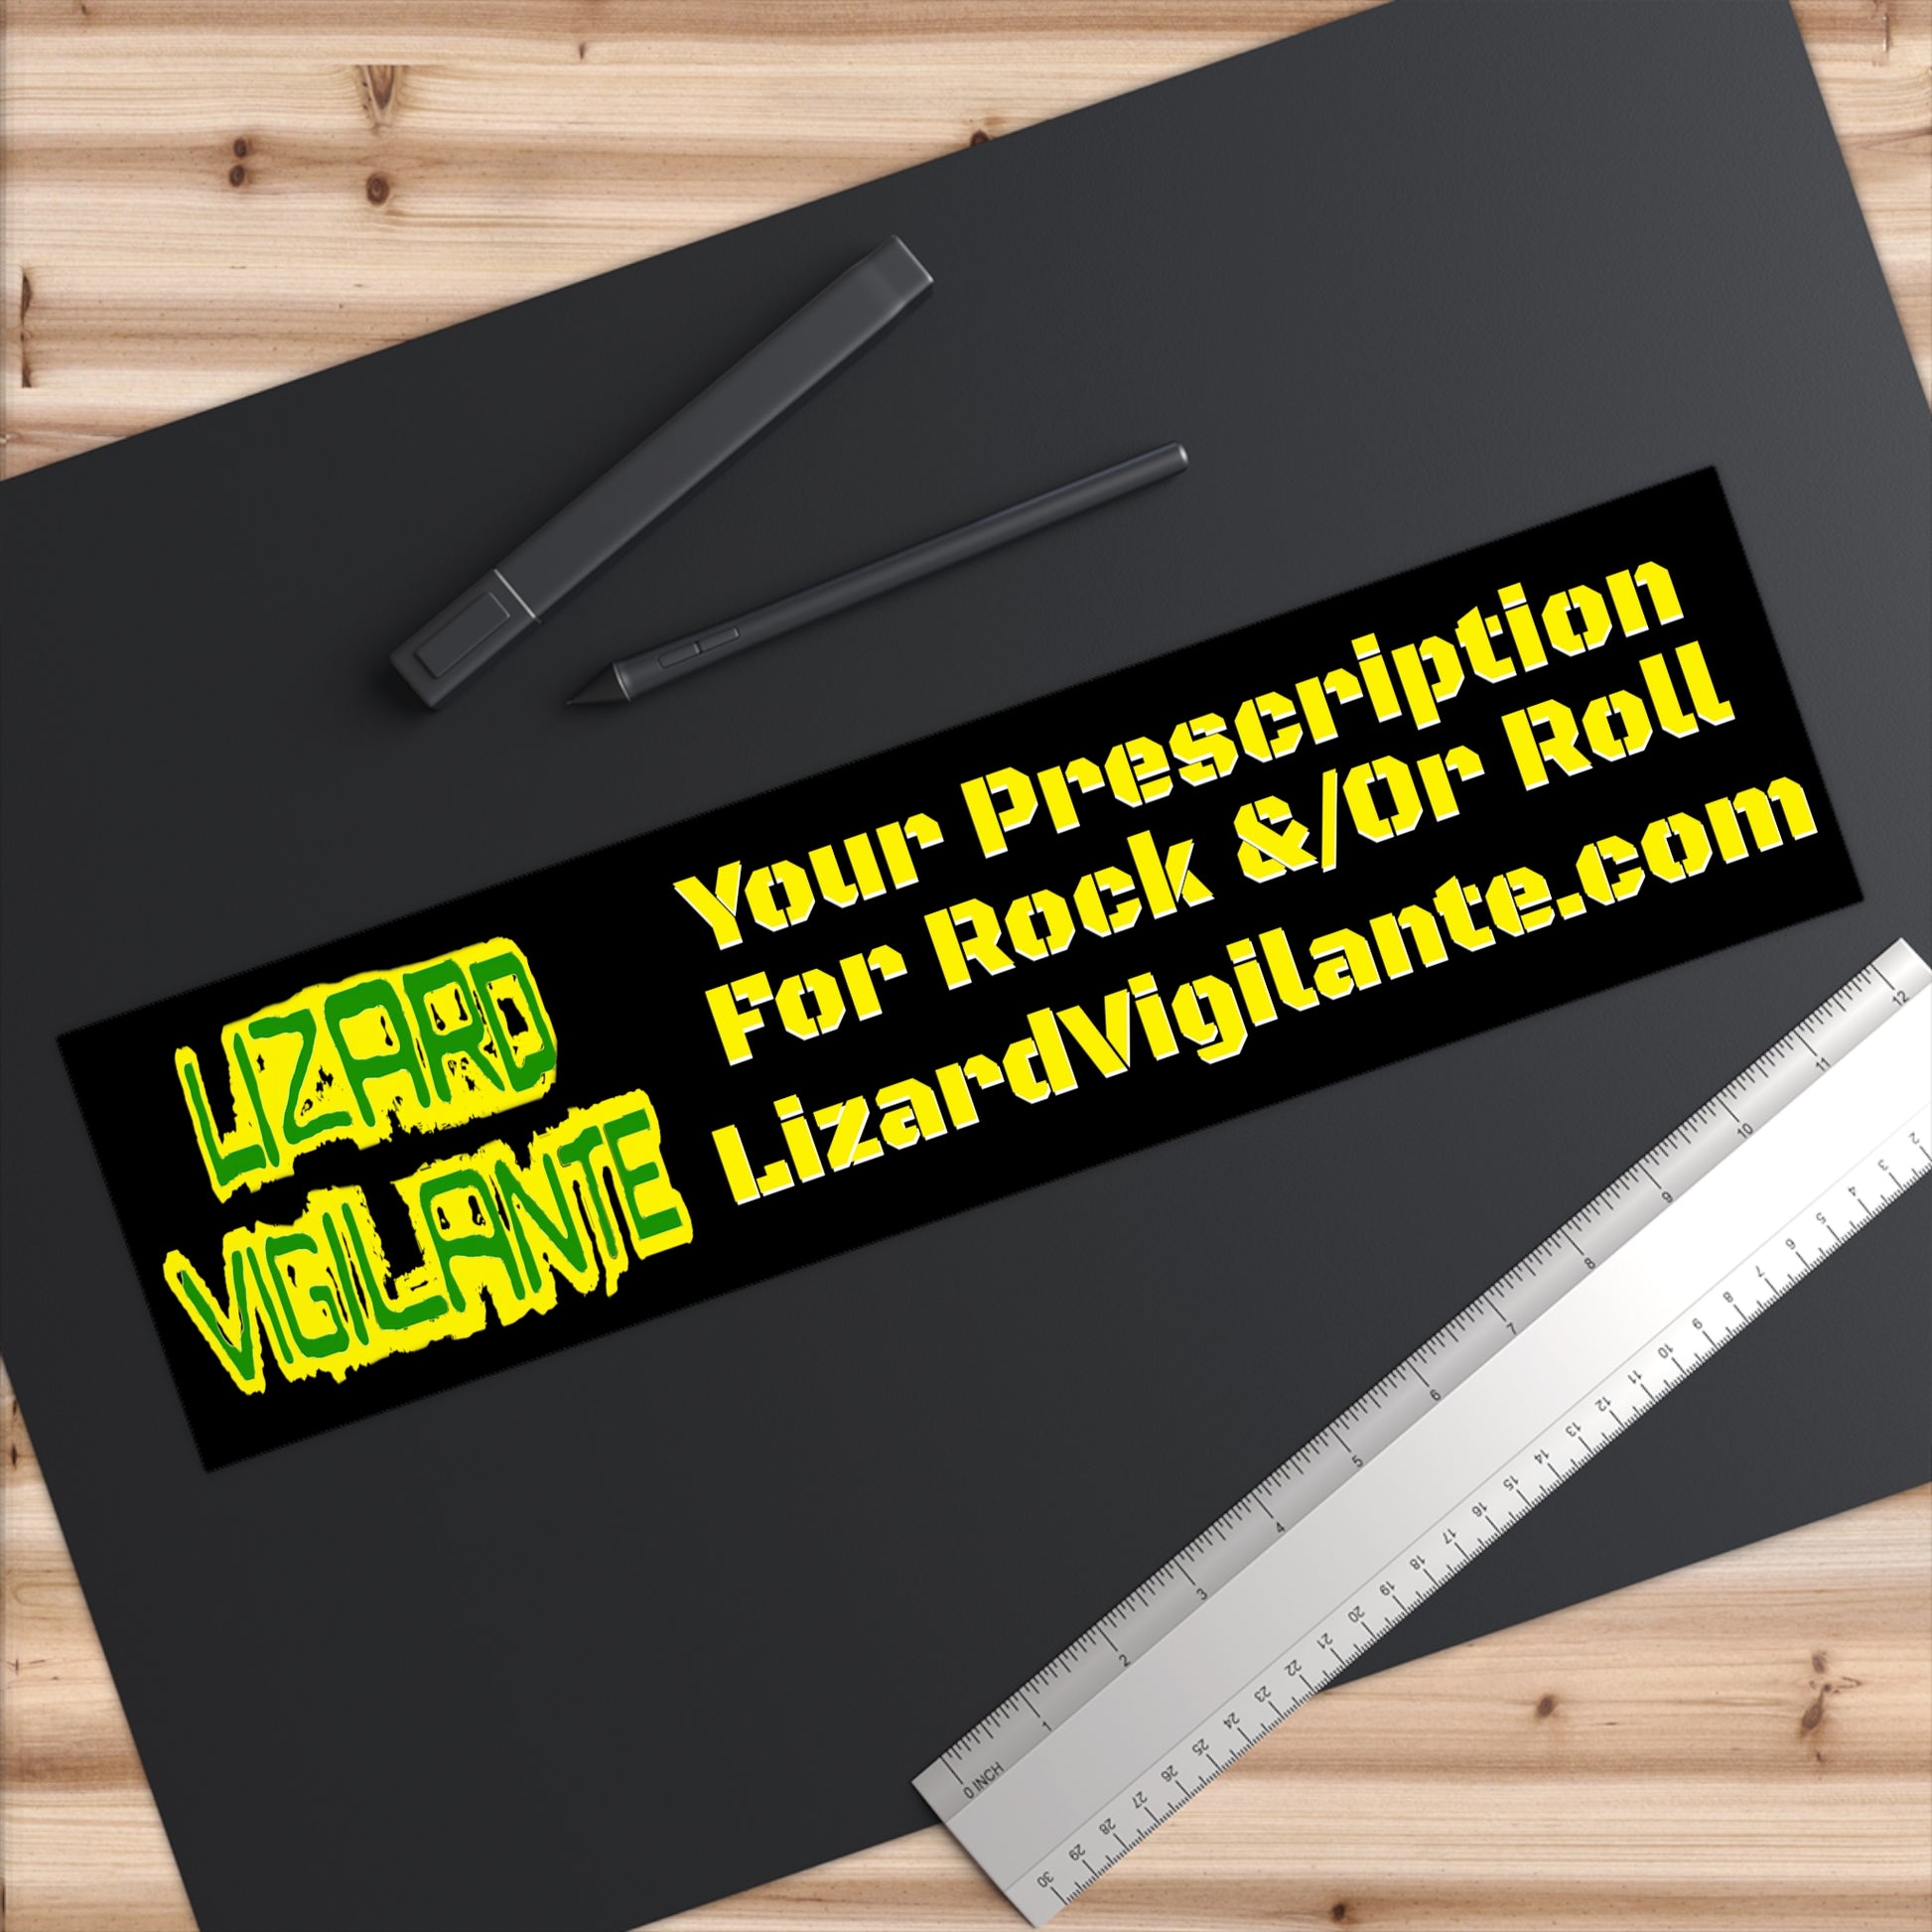 Lizard Vigilante Bumper Stickers - Premium Paper products from Printify - Just $9.99! Shop now at Lizard Vigilante